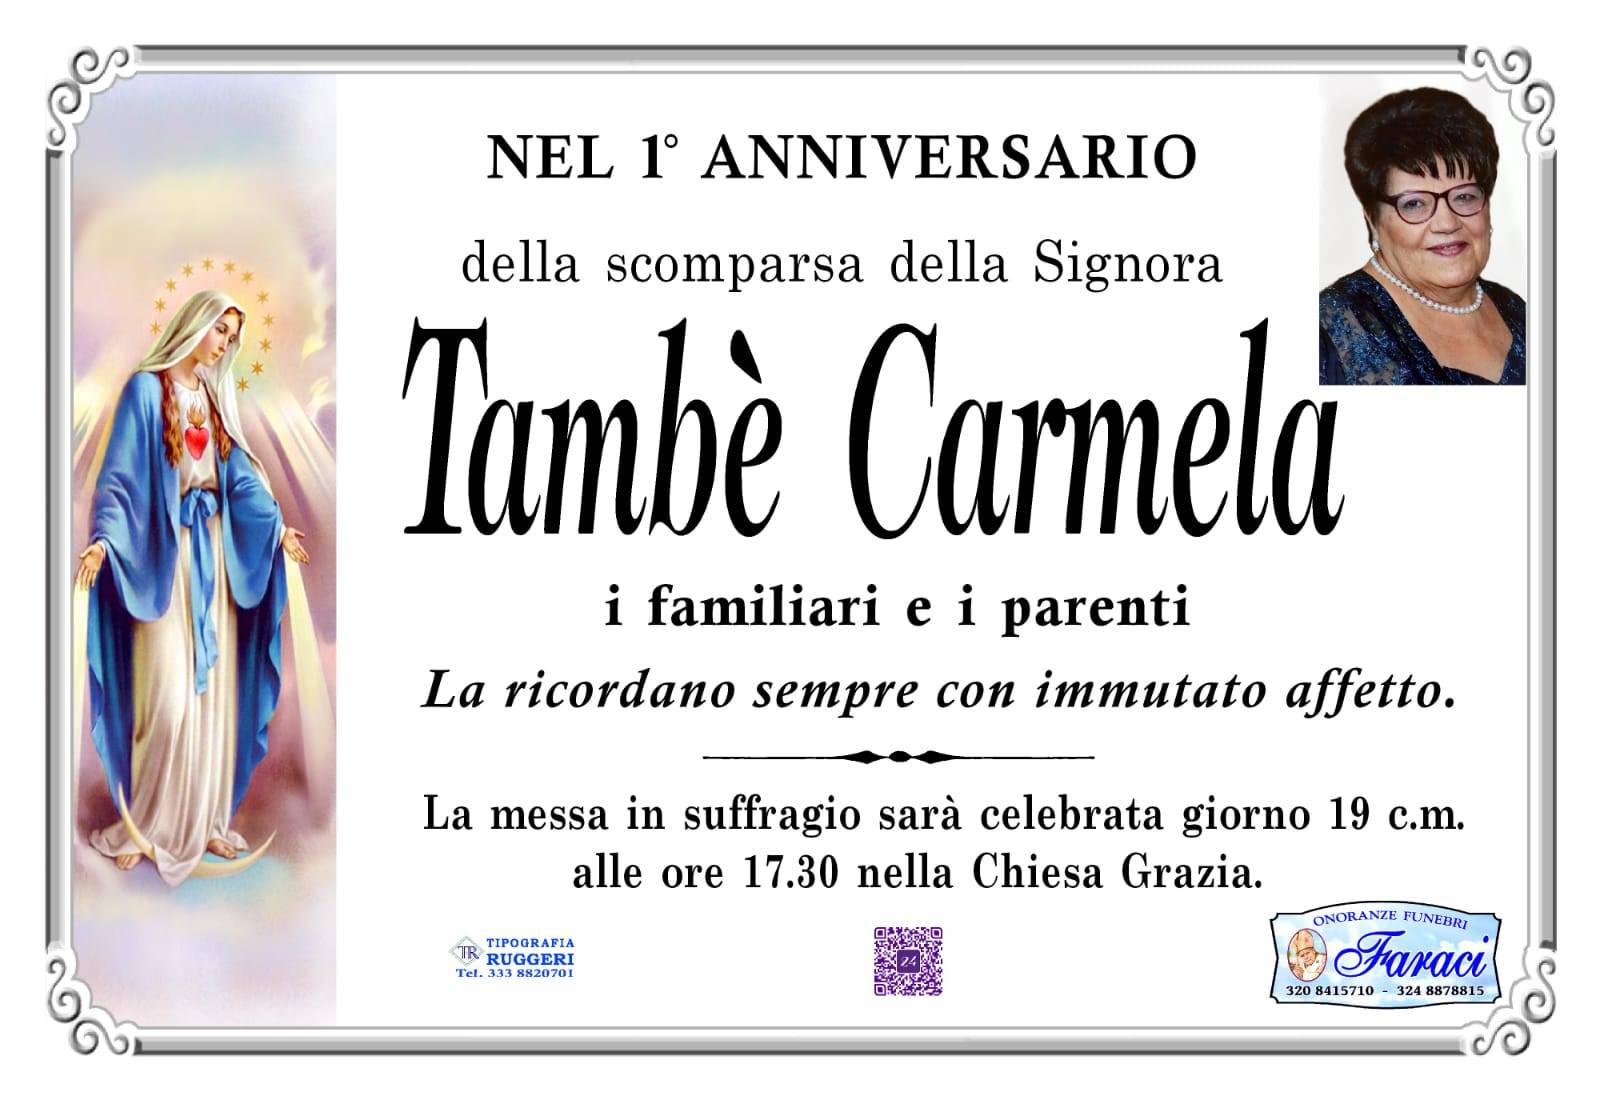 Carmela Tambè